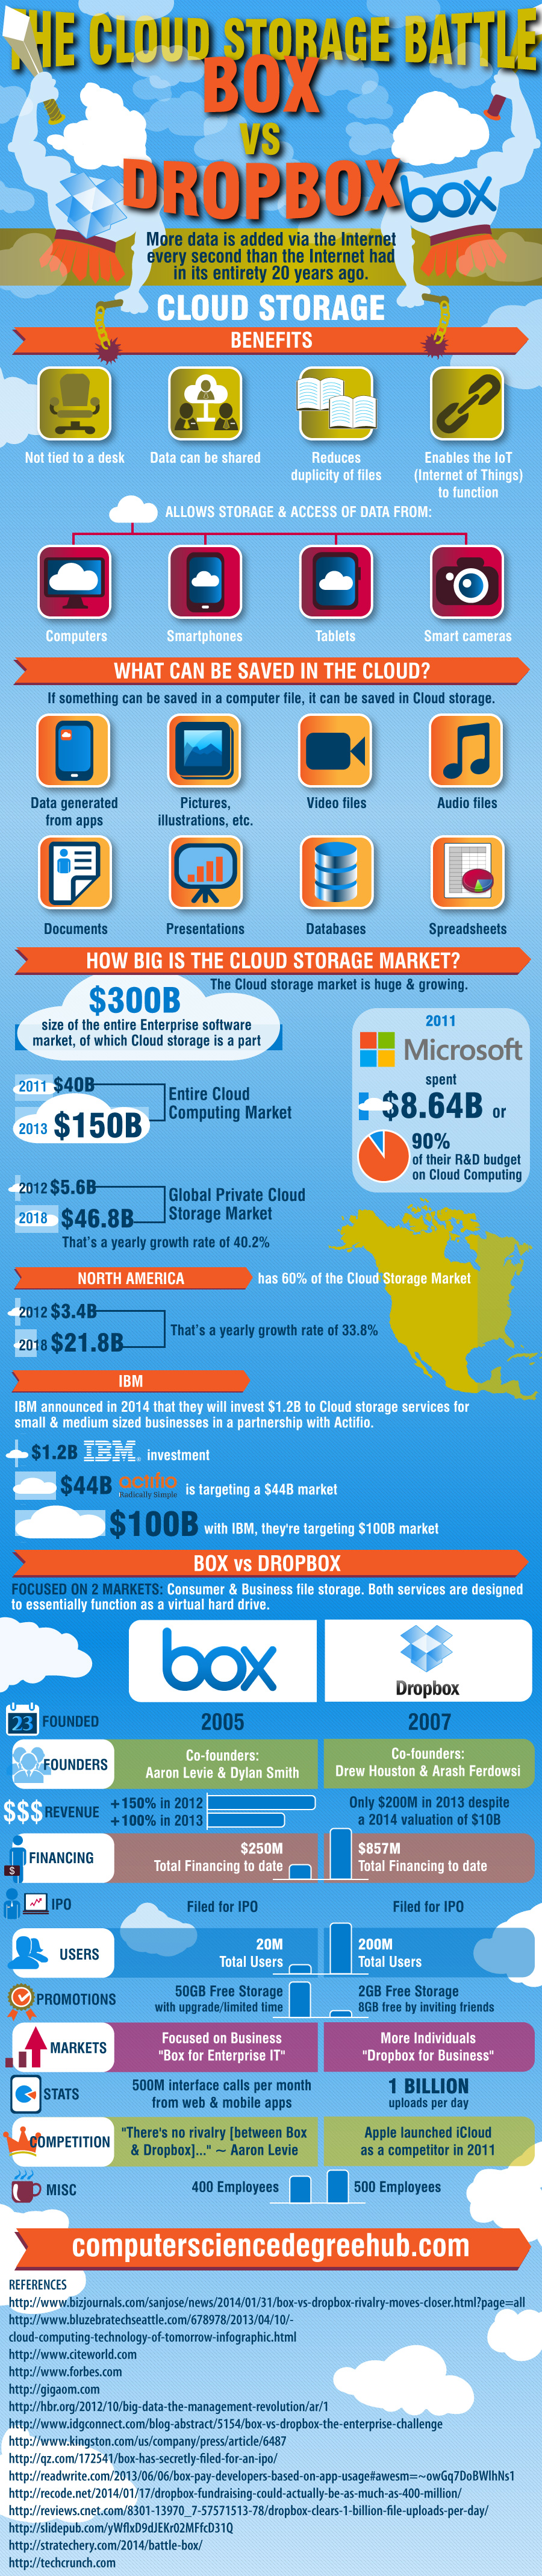 The Cloud Storage Battle: Box vs. Dropbox